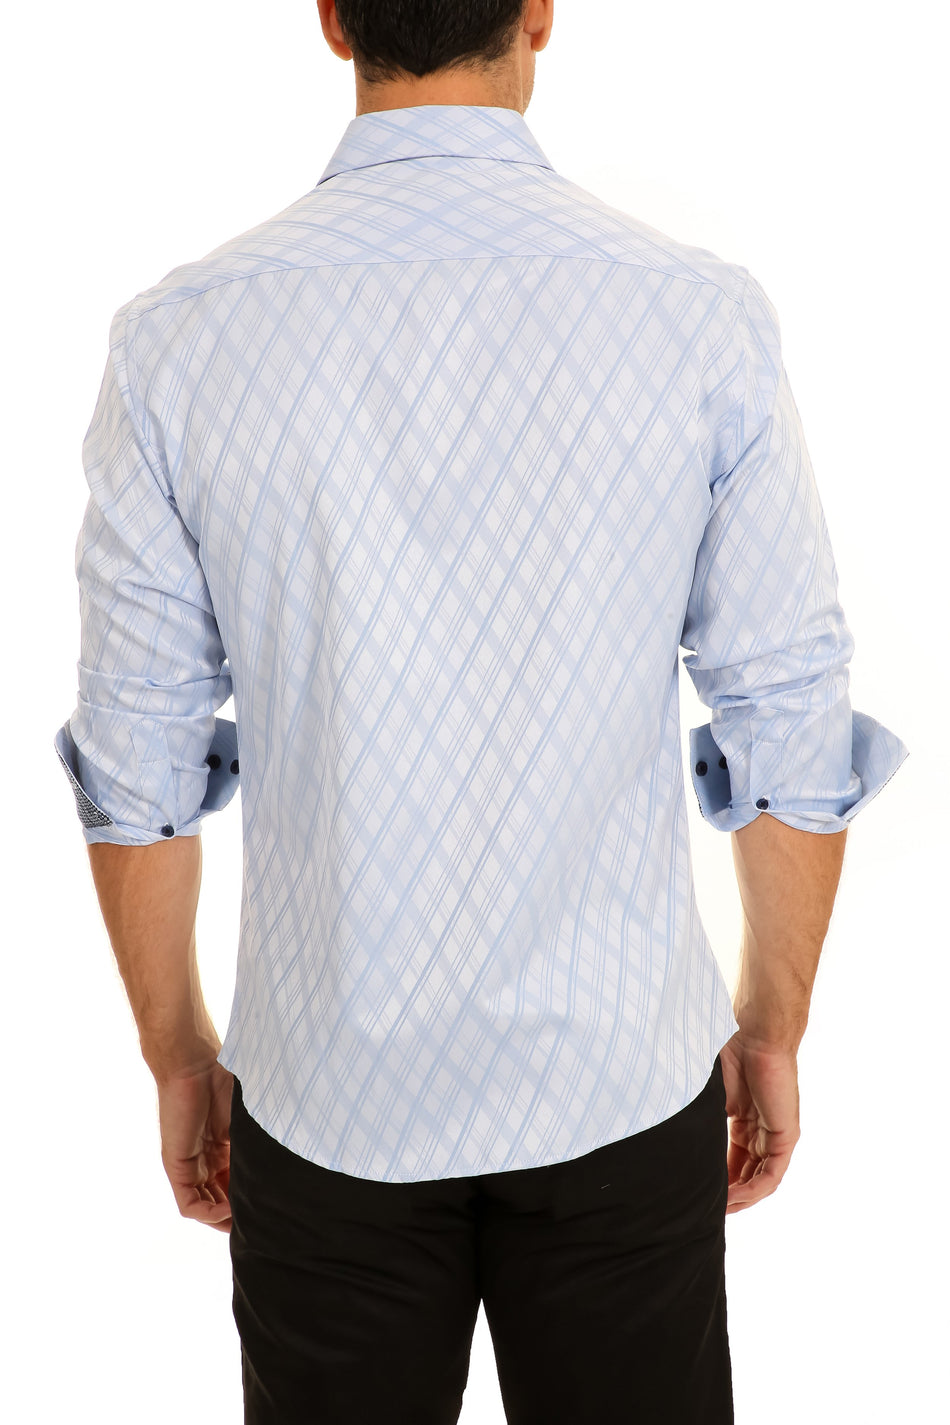 Crisscrossed Diamond Pattern Long Sleeve Dress Shirt Light Blue